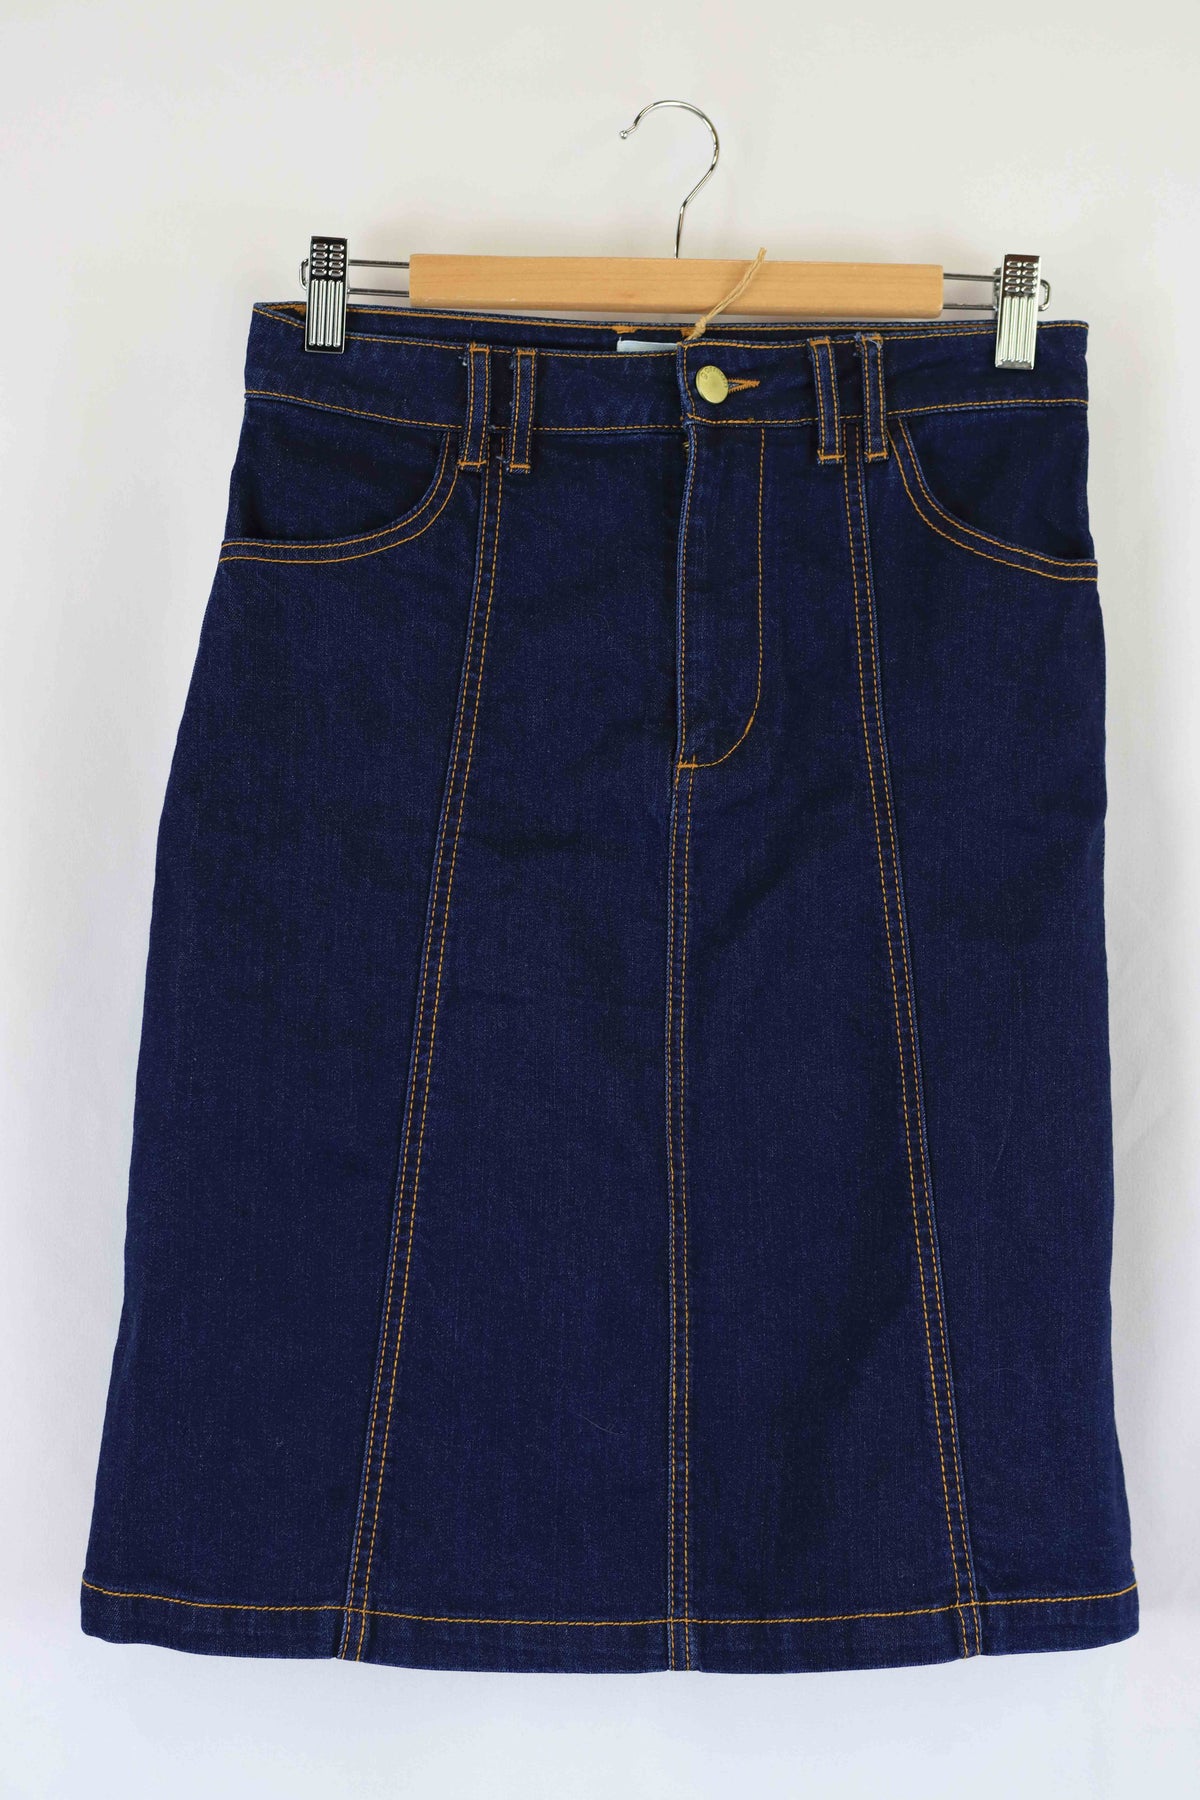 Gorman Blue Denim Skirt 10